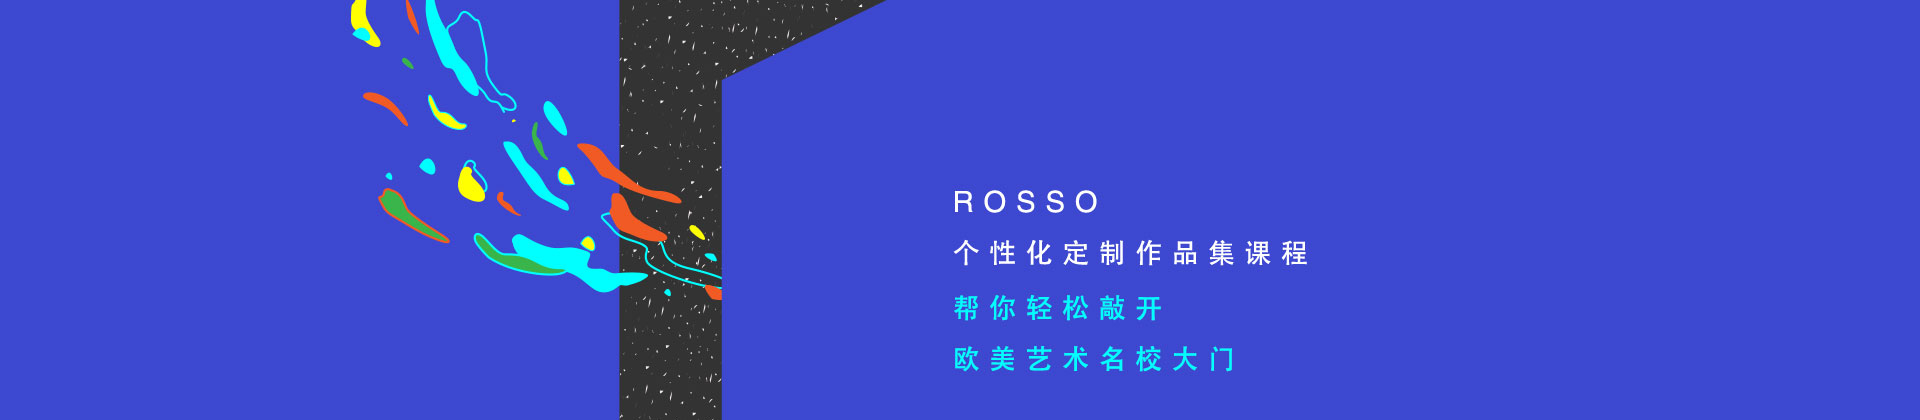 北京ROSSO国际艺术中心